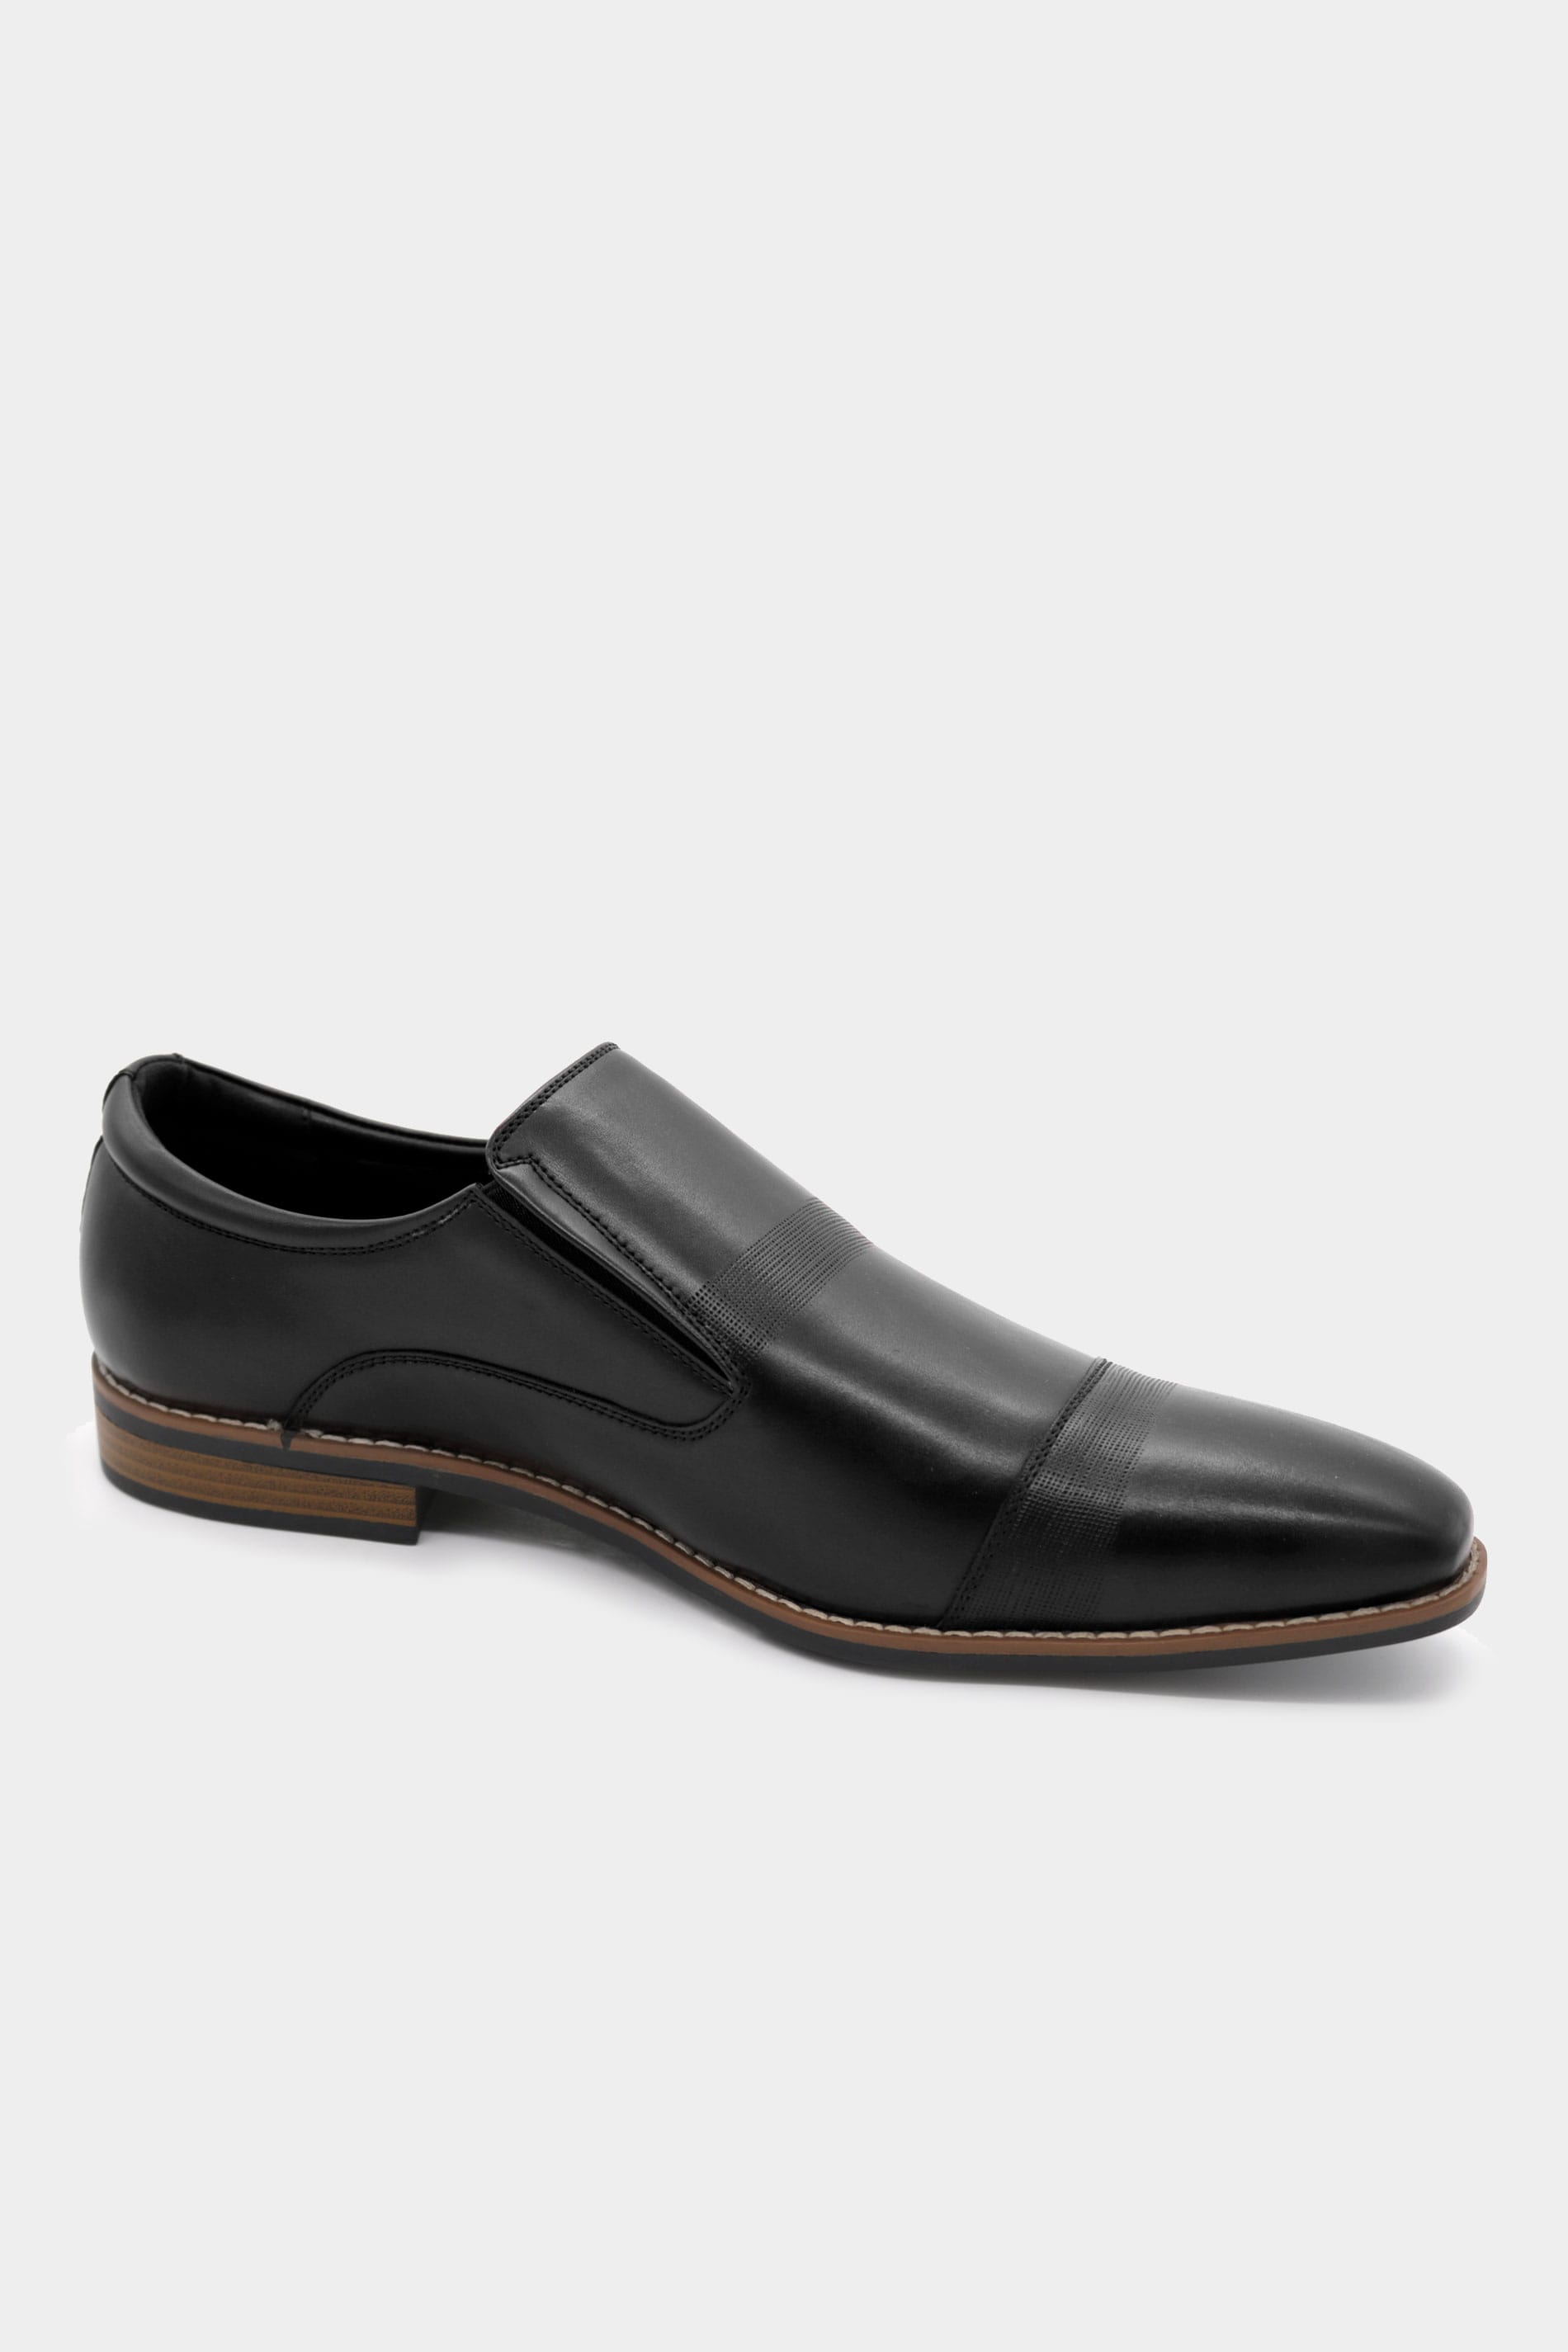 D555 Black Formal Slip On Shoes | BadRhino | BadRhino